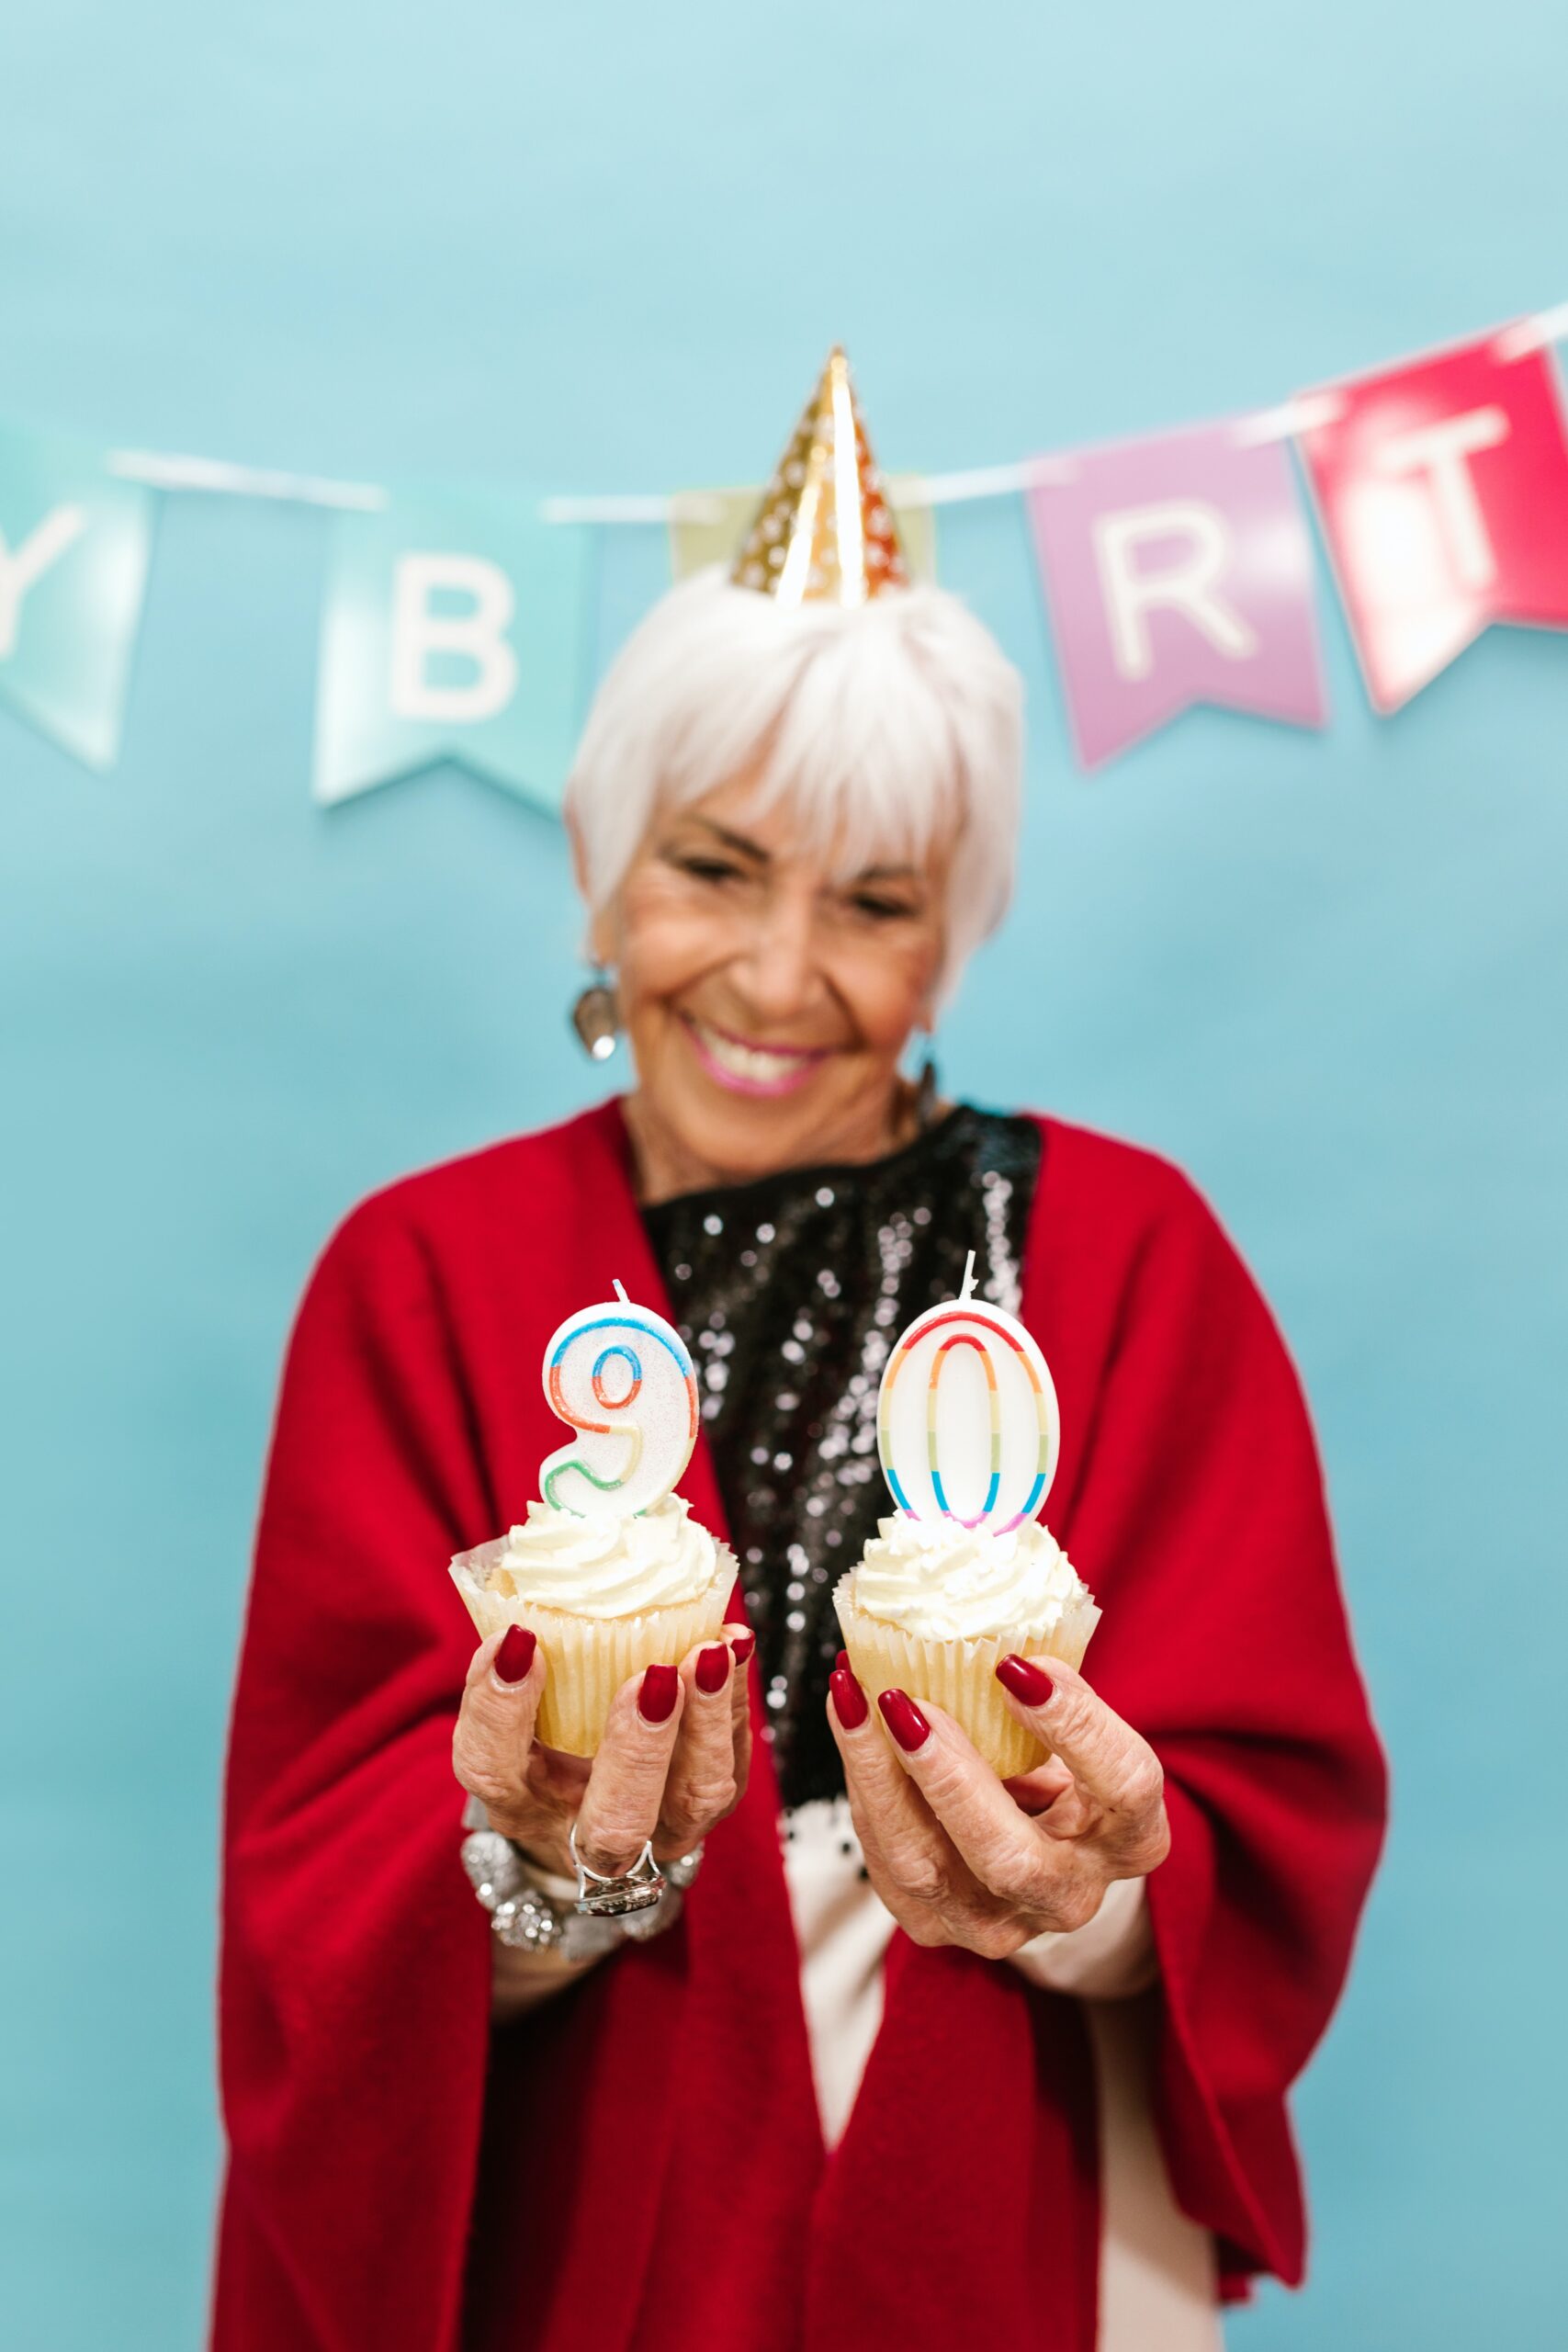 Happy 90th Birthday Wishes